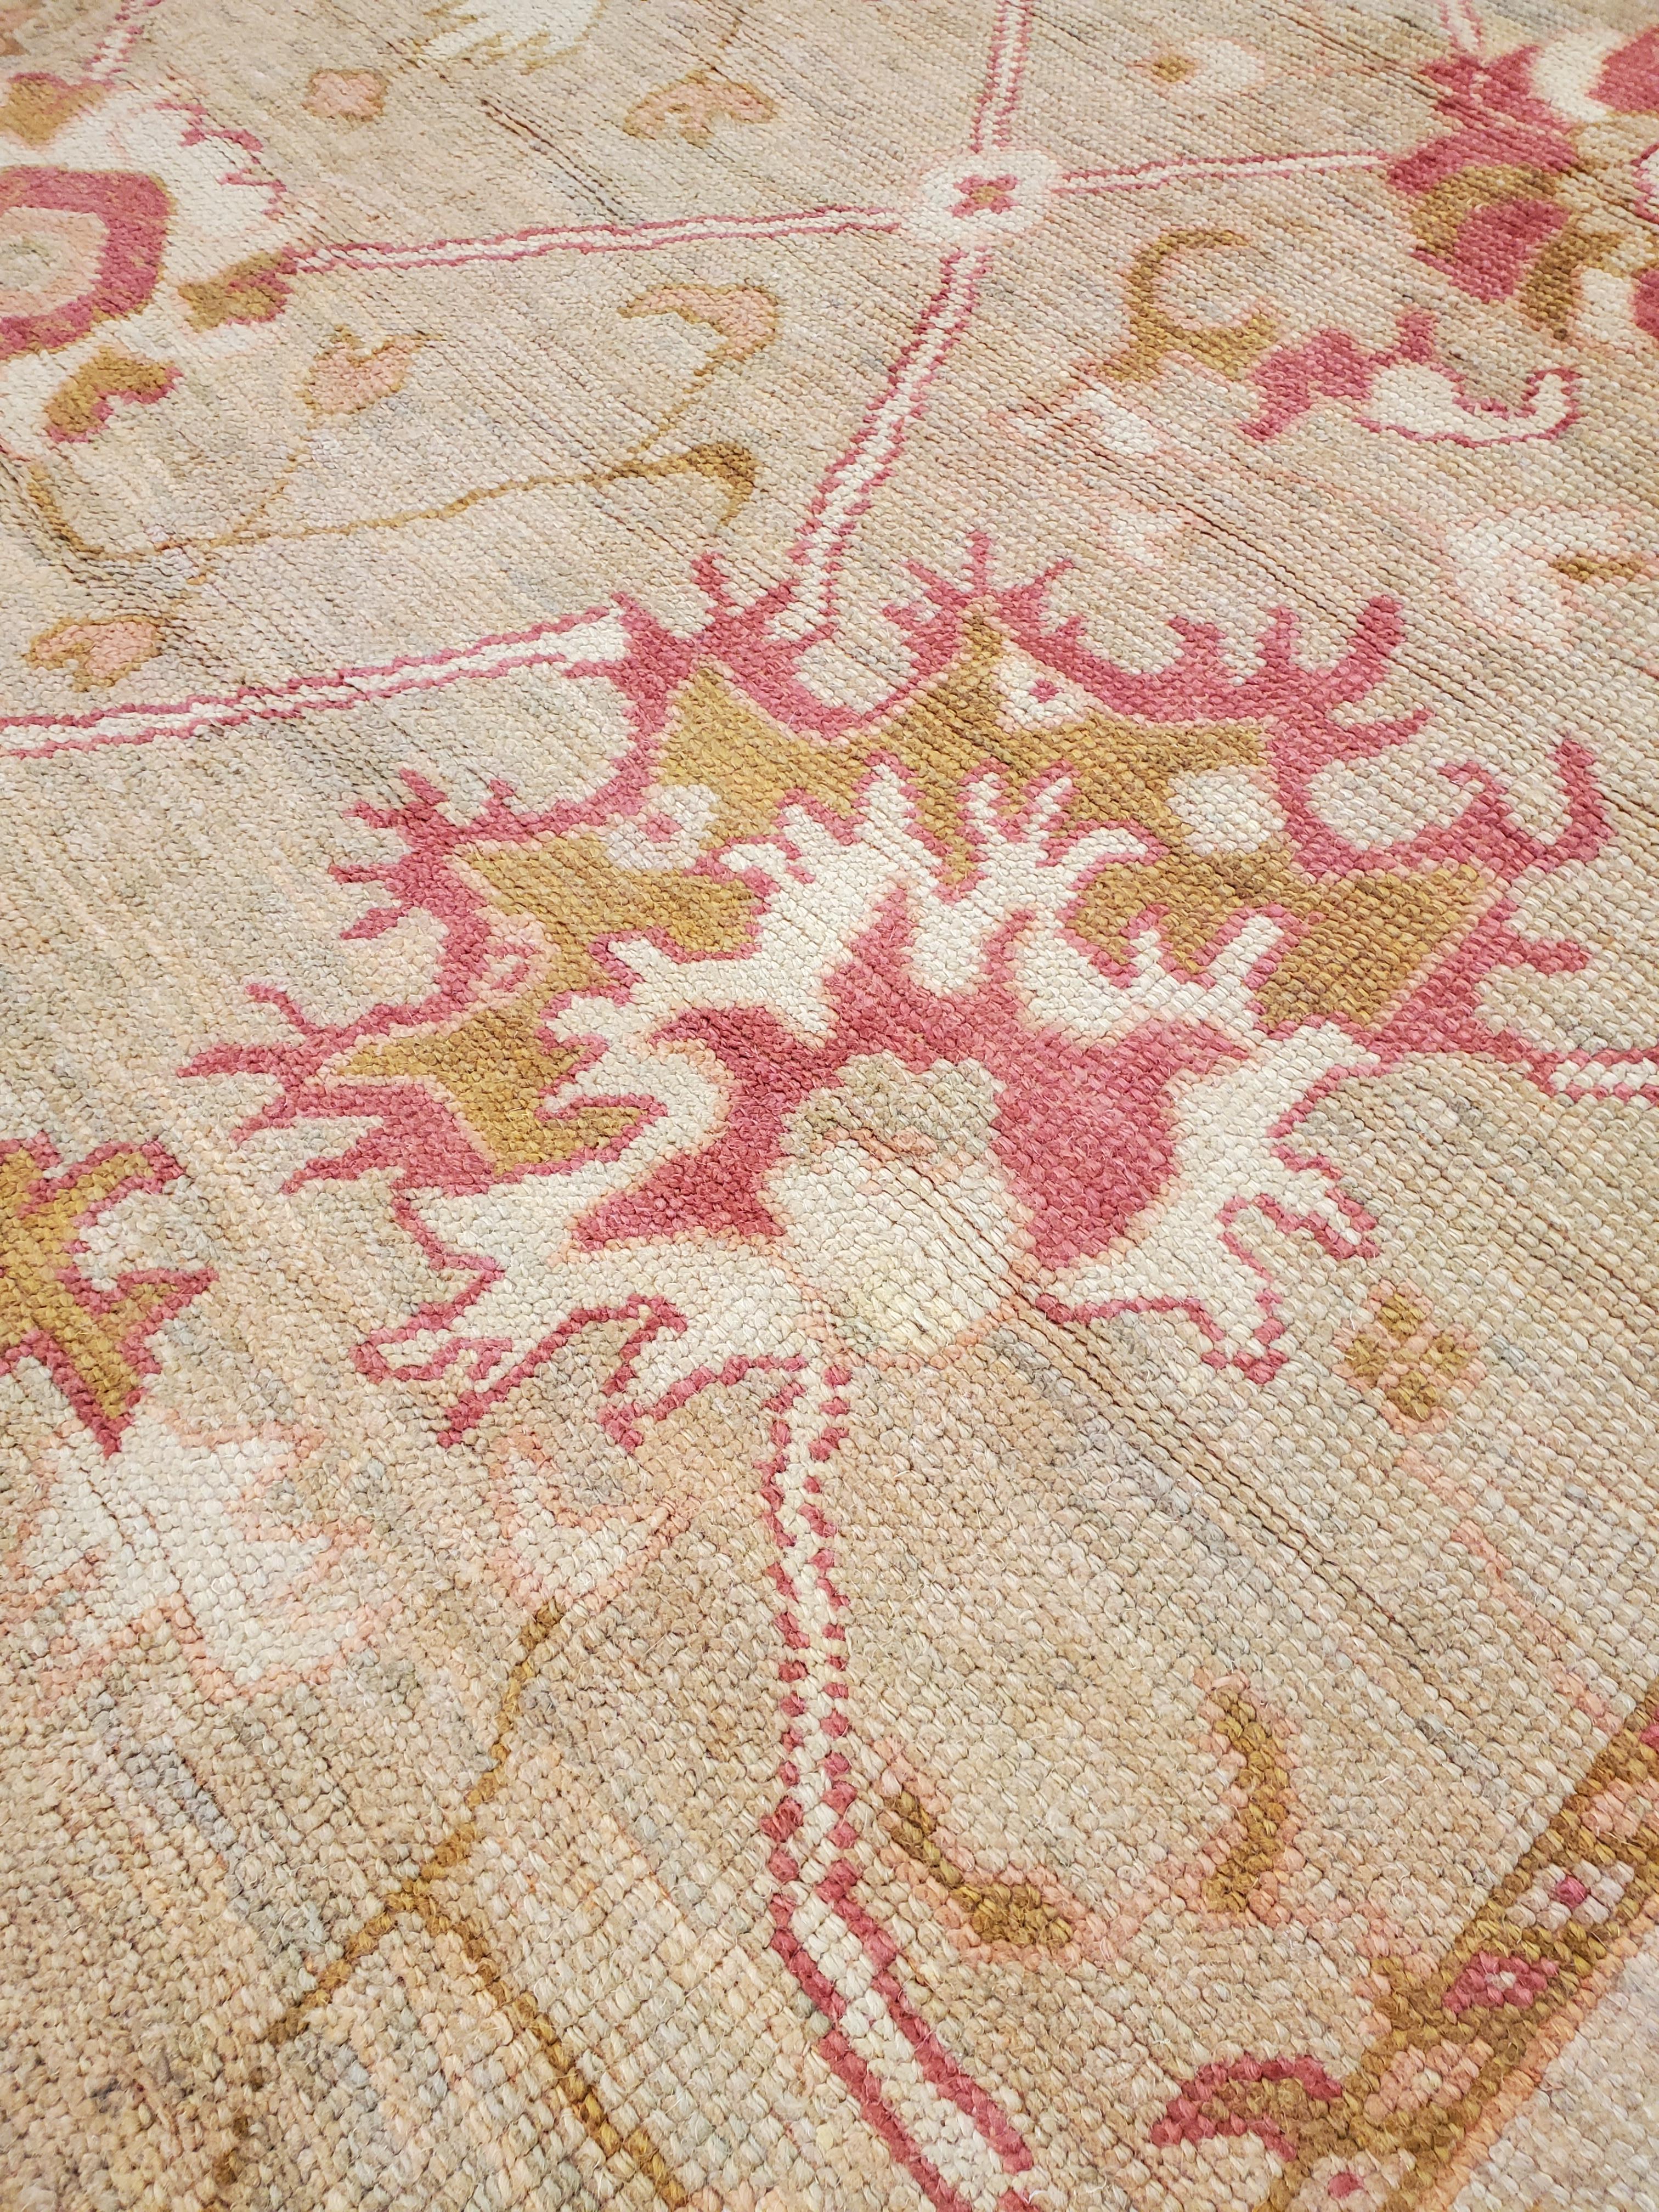 Antique Oushak Carpet, Turkish Rugs, Handmade Oriental Rugs, Pink Ivory Fine Rug For Sale 7